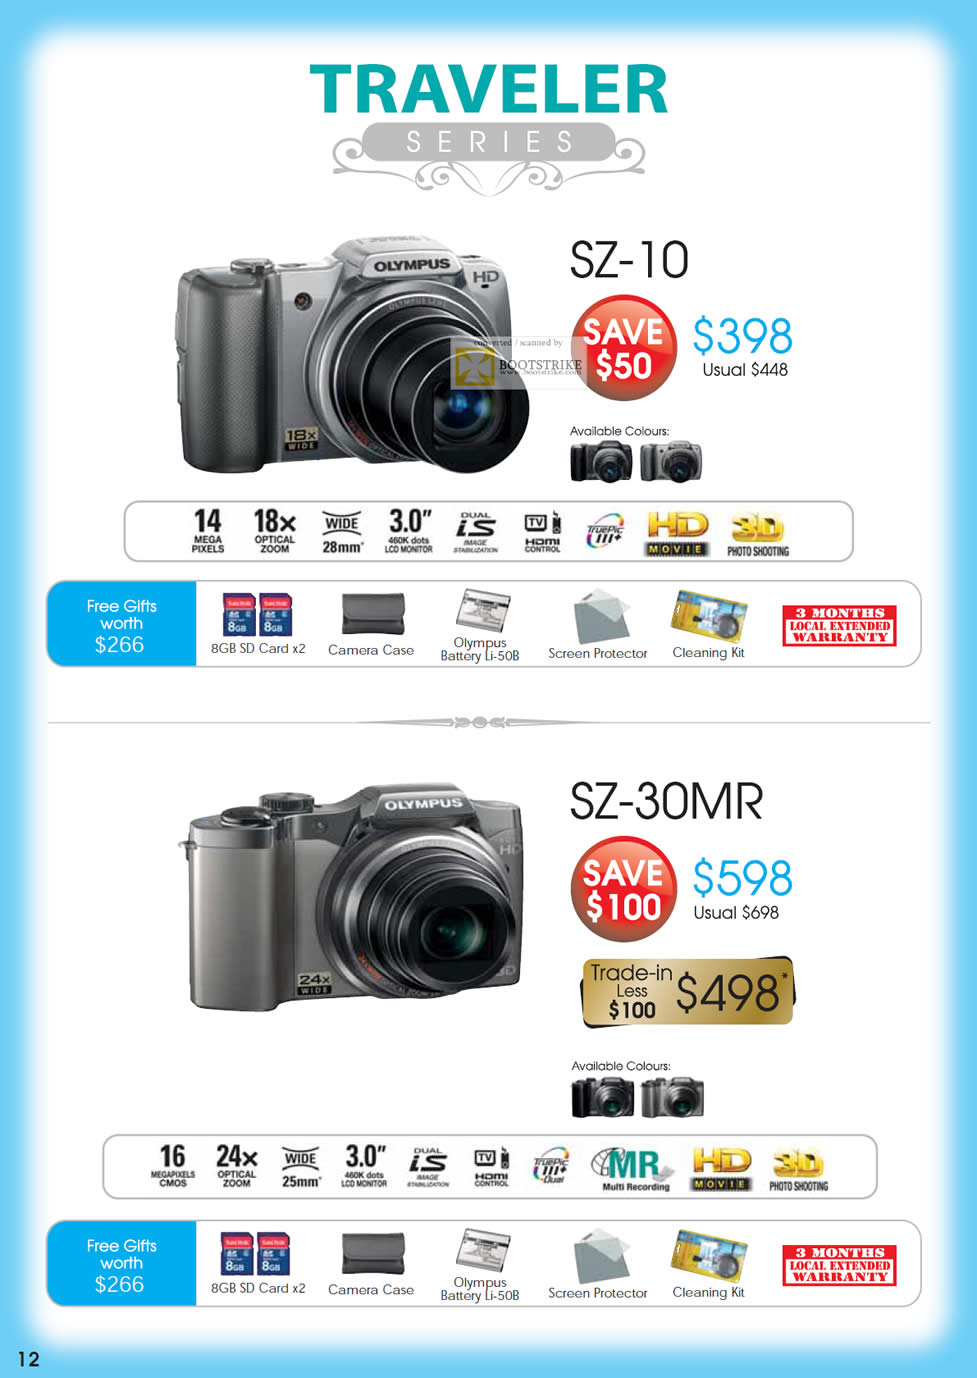 SITEX 2011 price list image brochure of Olympus Digital Cameras Traveler Series SZ-10, SZ-30MR